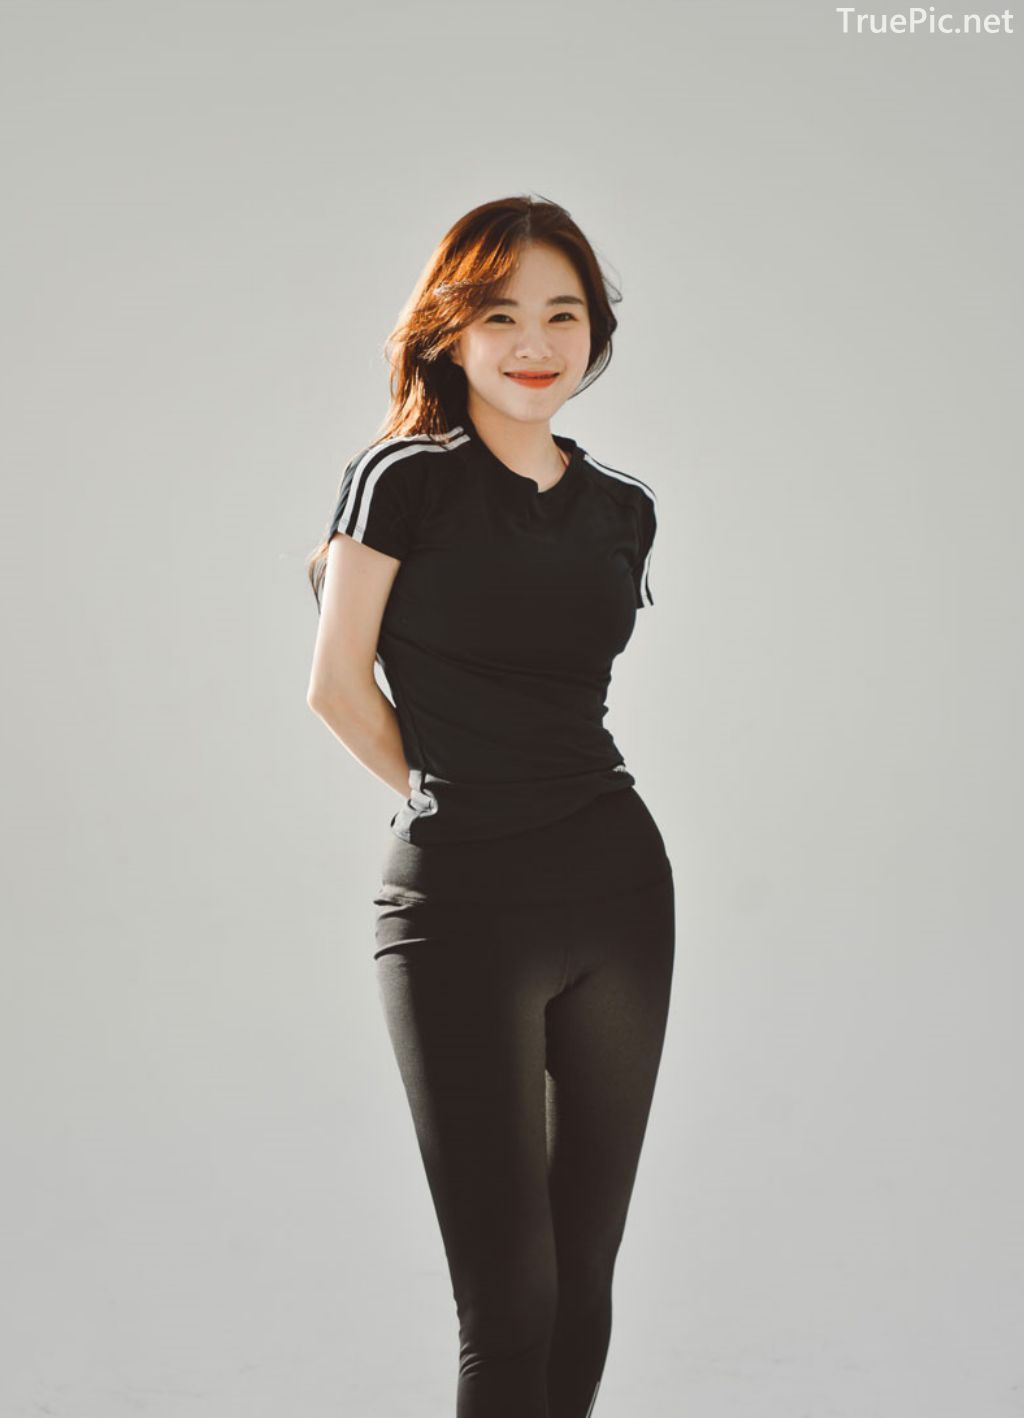 Korean Lingerie Queen - Haneul - Fitness Set Collection - TruePic.net - Picture 64